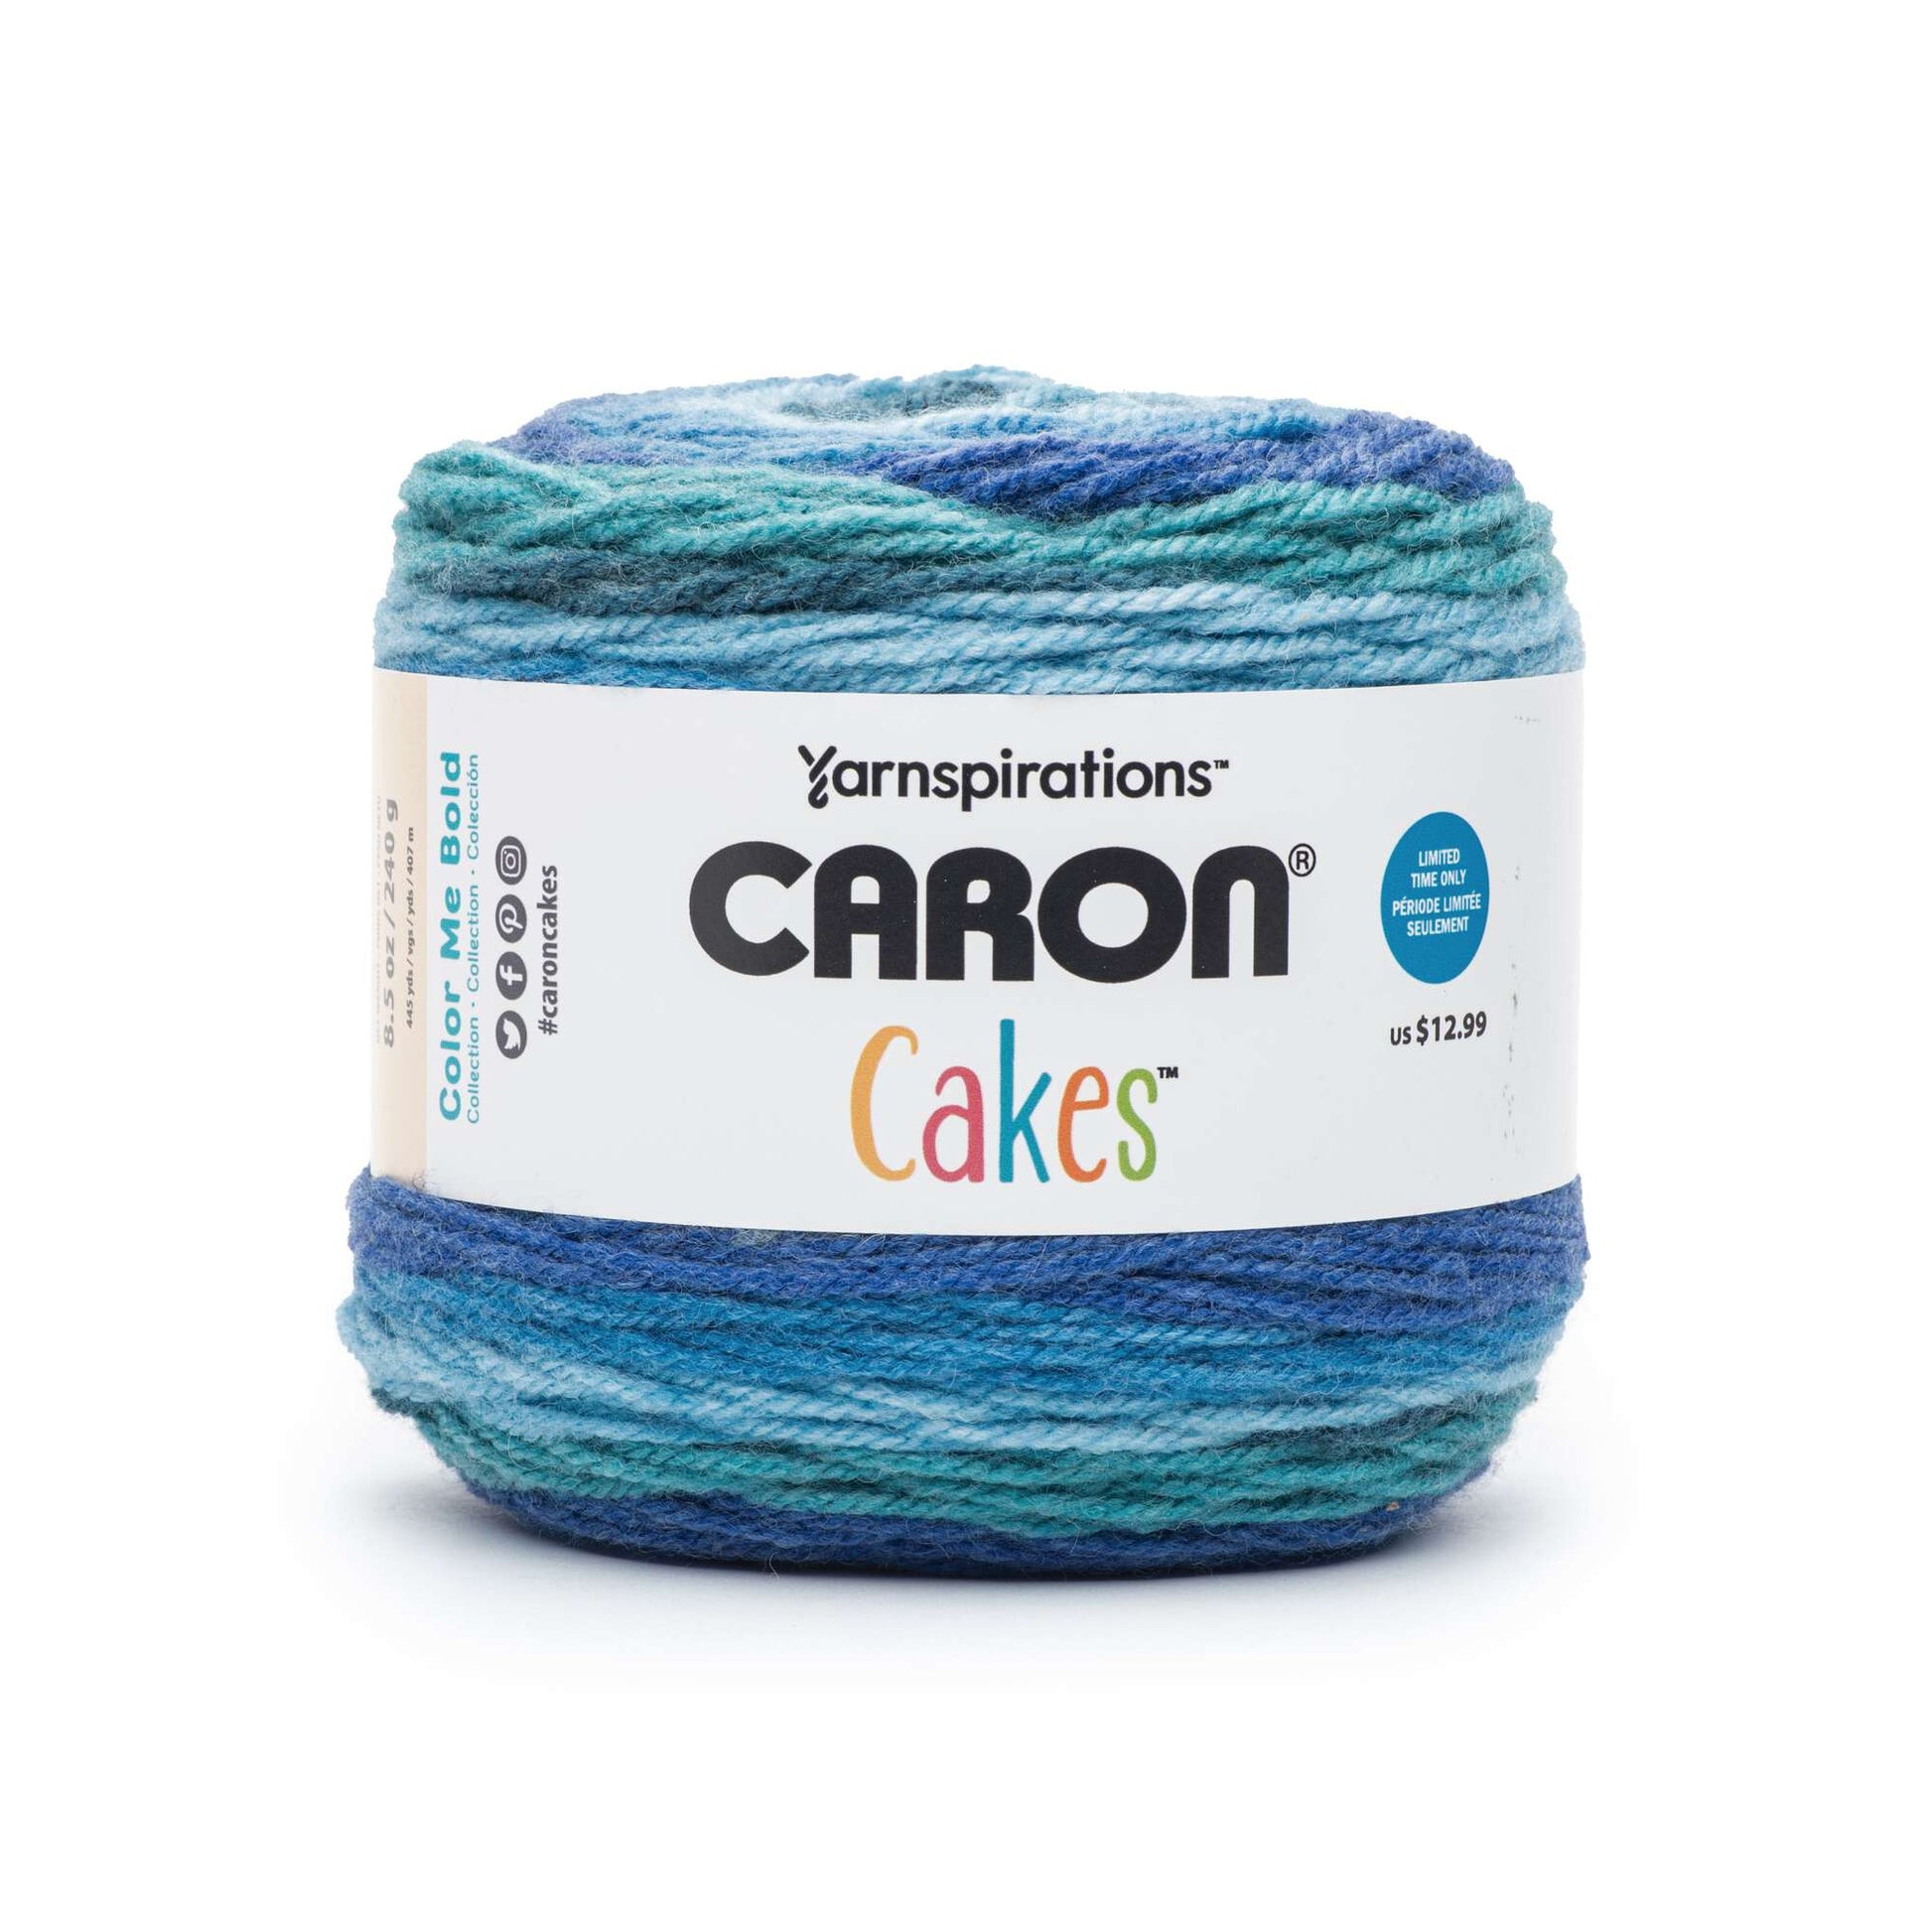 Caron Cakes Yarn 7.1 oz - Faerie Cake Lot of 2 - Clearance/Liquidation!